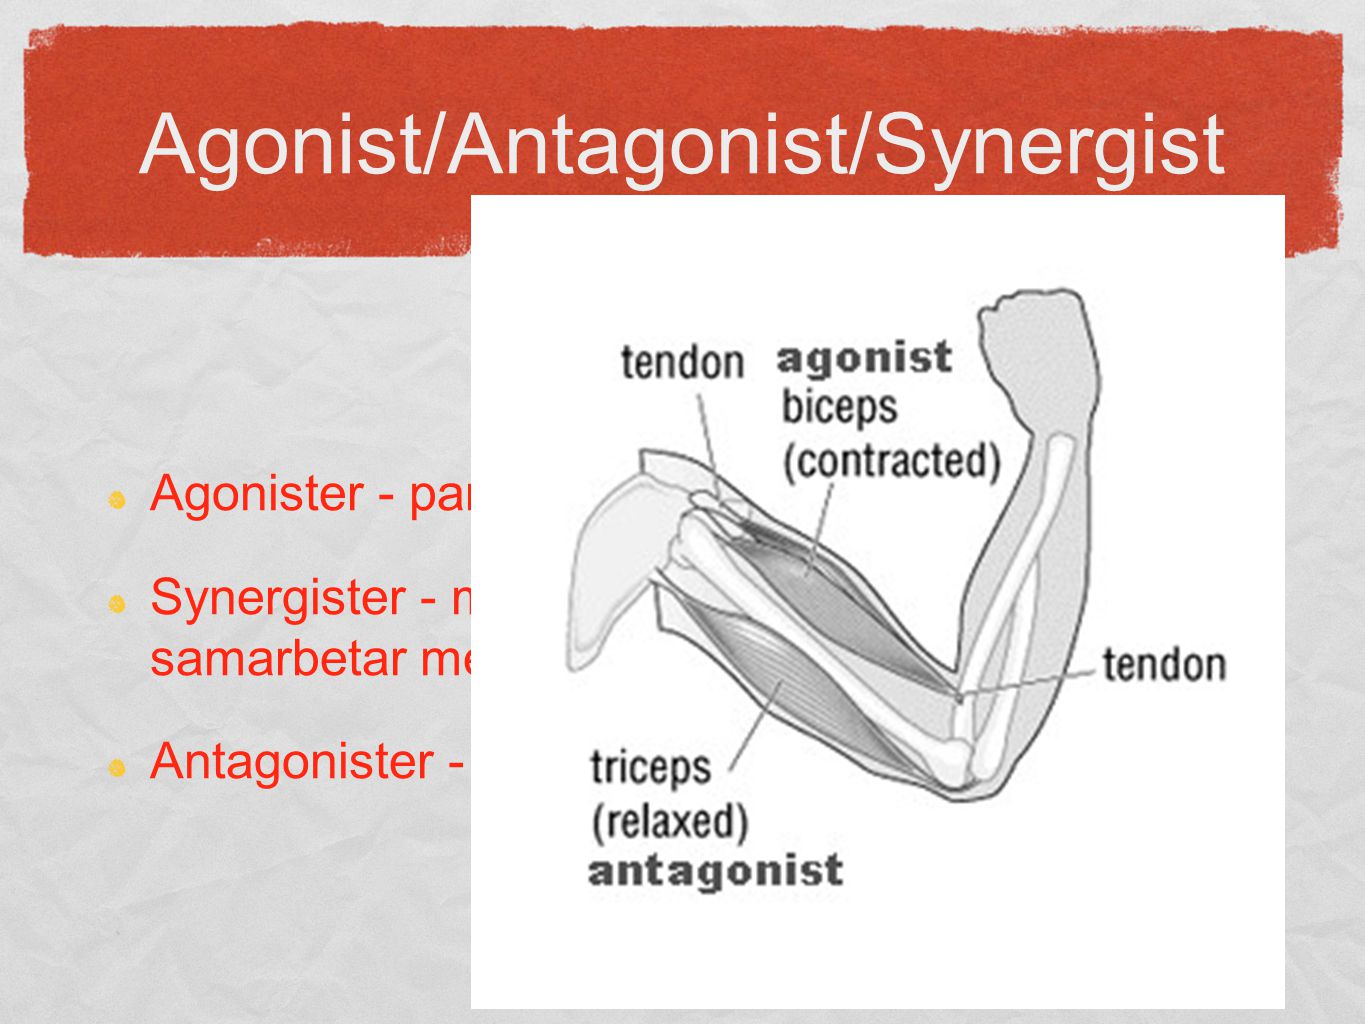 Agonist/Antagonist/Synergist